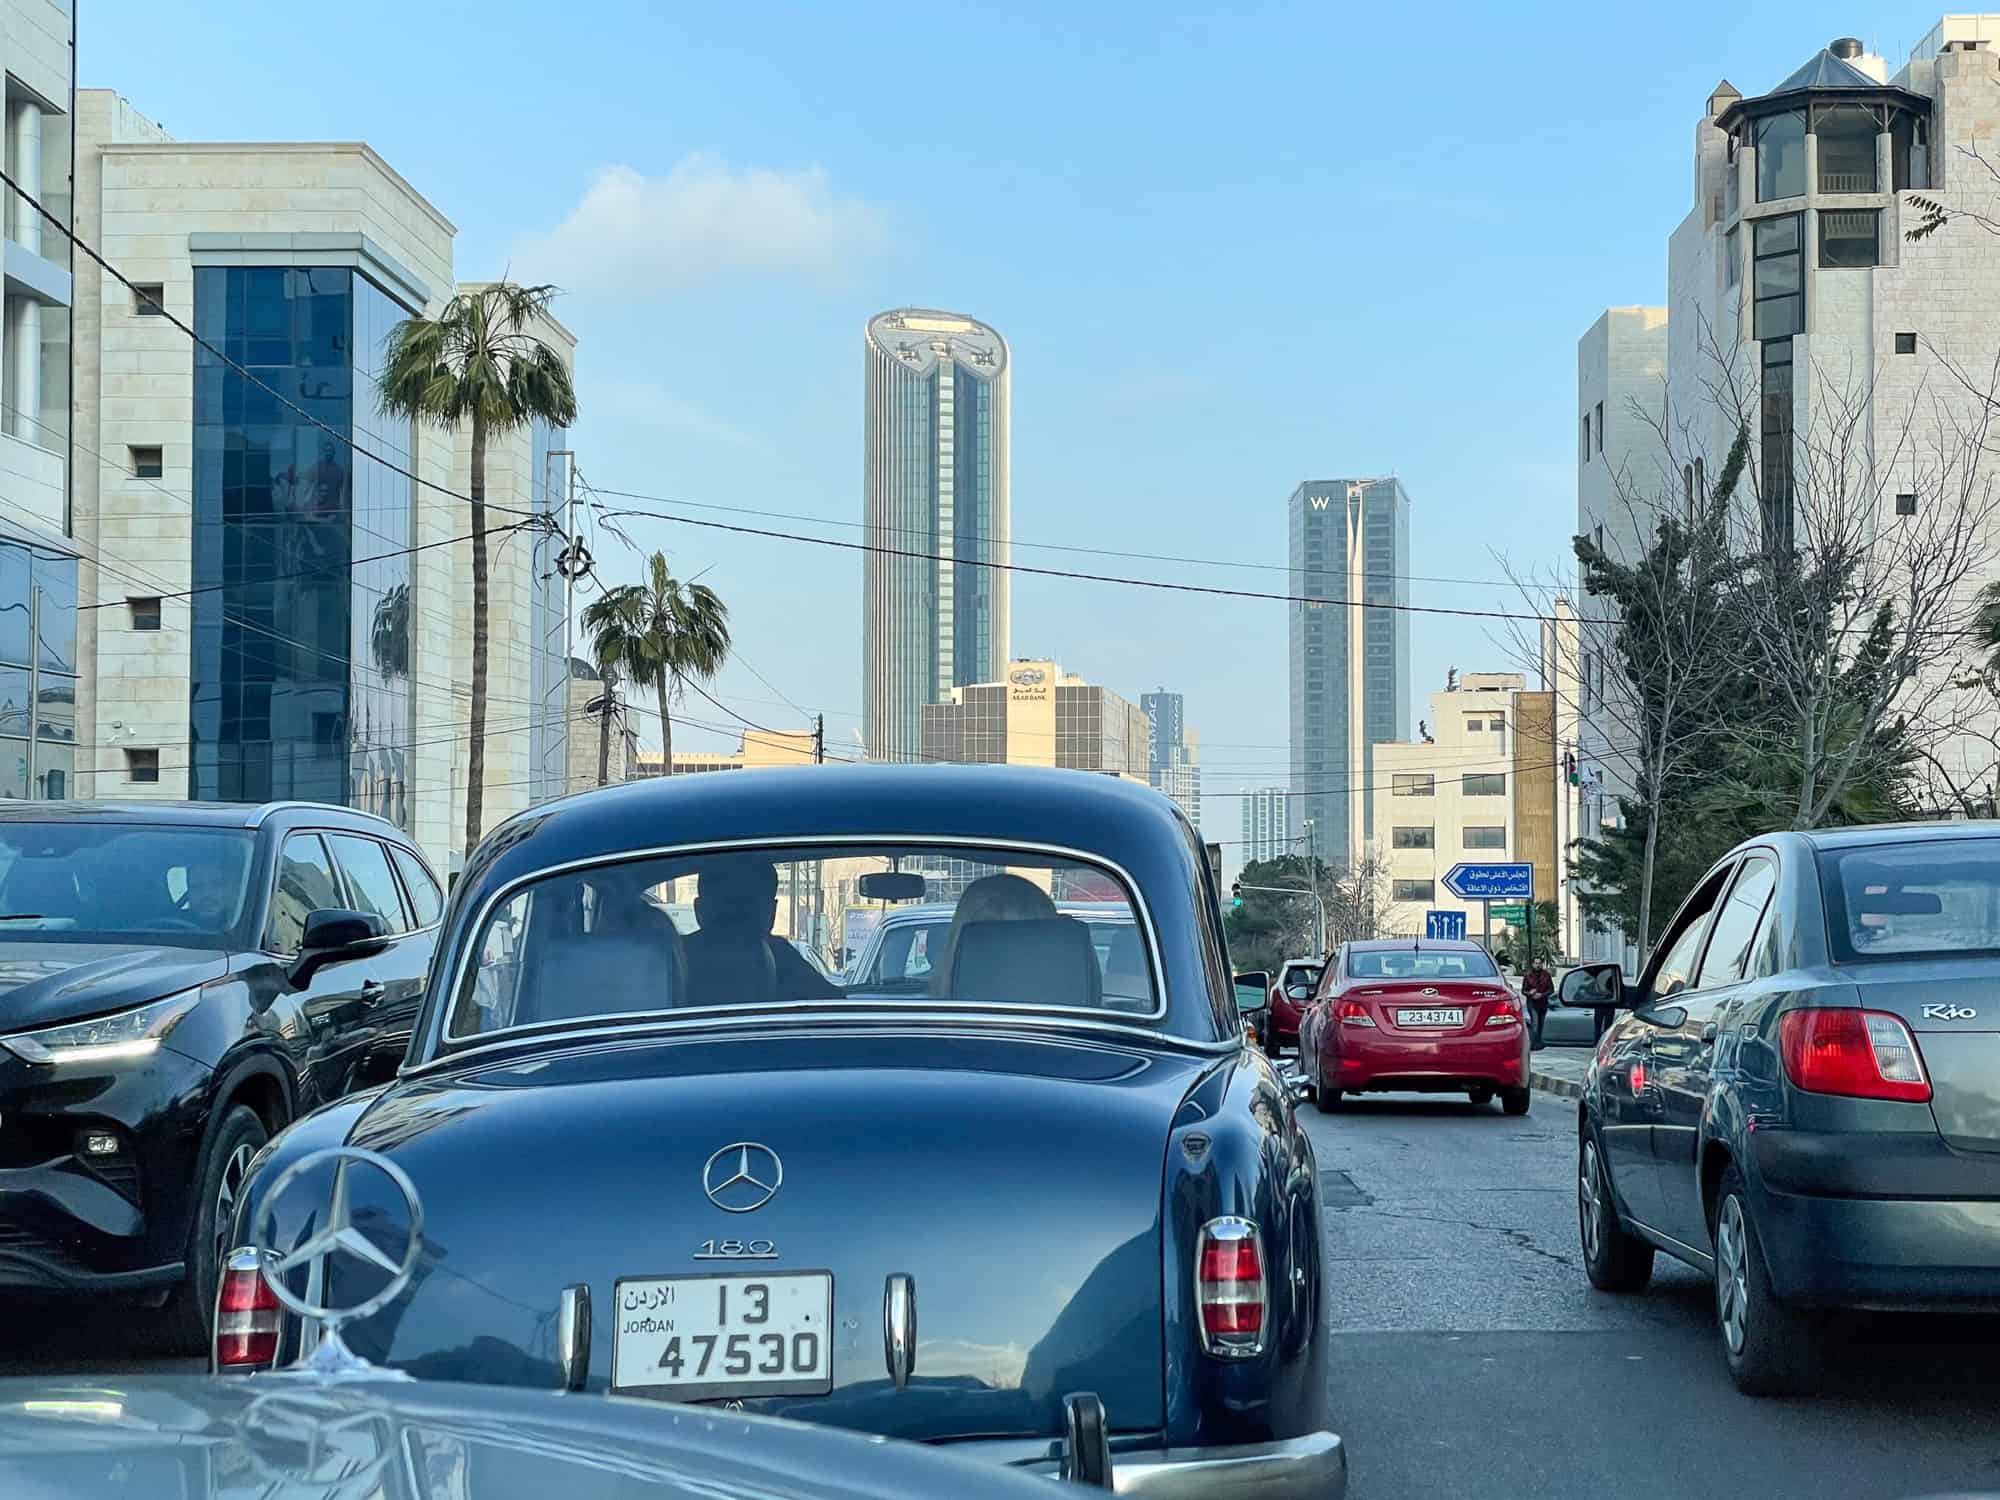 Jordan - Amman - driving through downtown in the King's cars